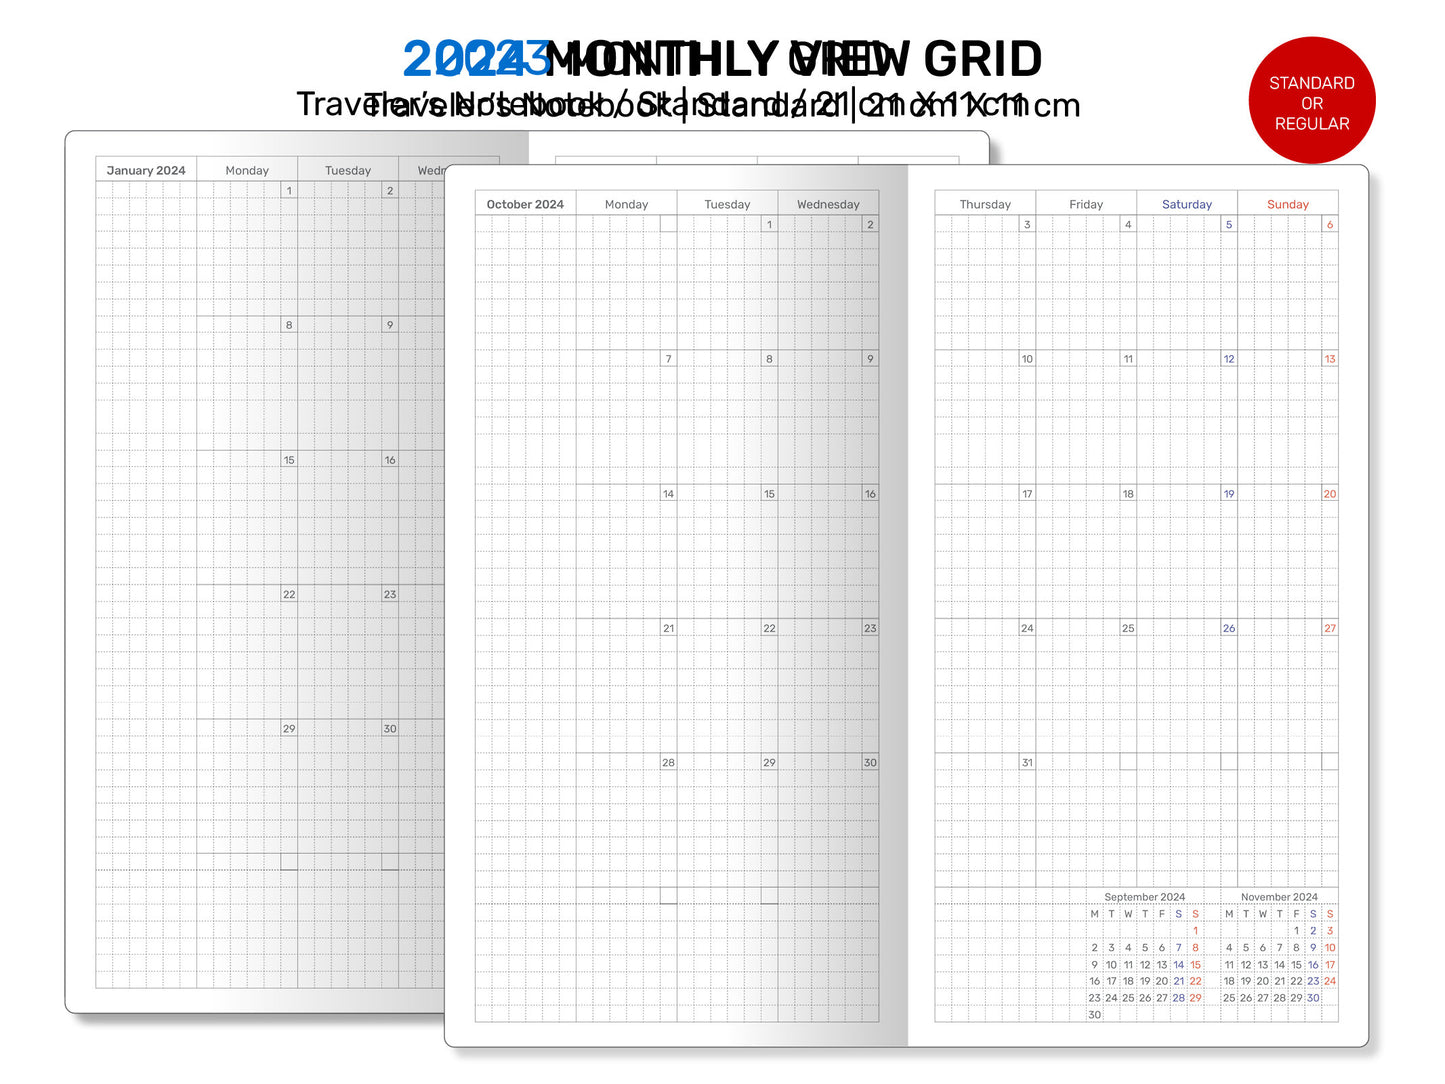 2024 Monthly GRID Standard TN Size Traveler's Notebook - Printable Insert Diary MONDAY Start DSTN008